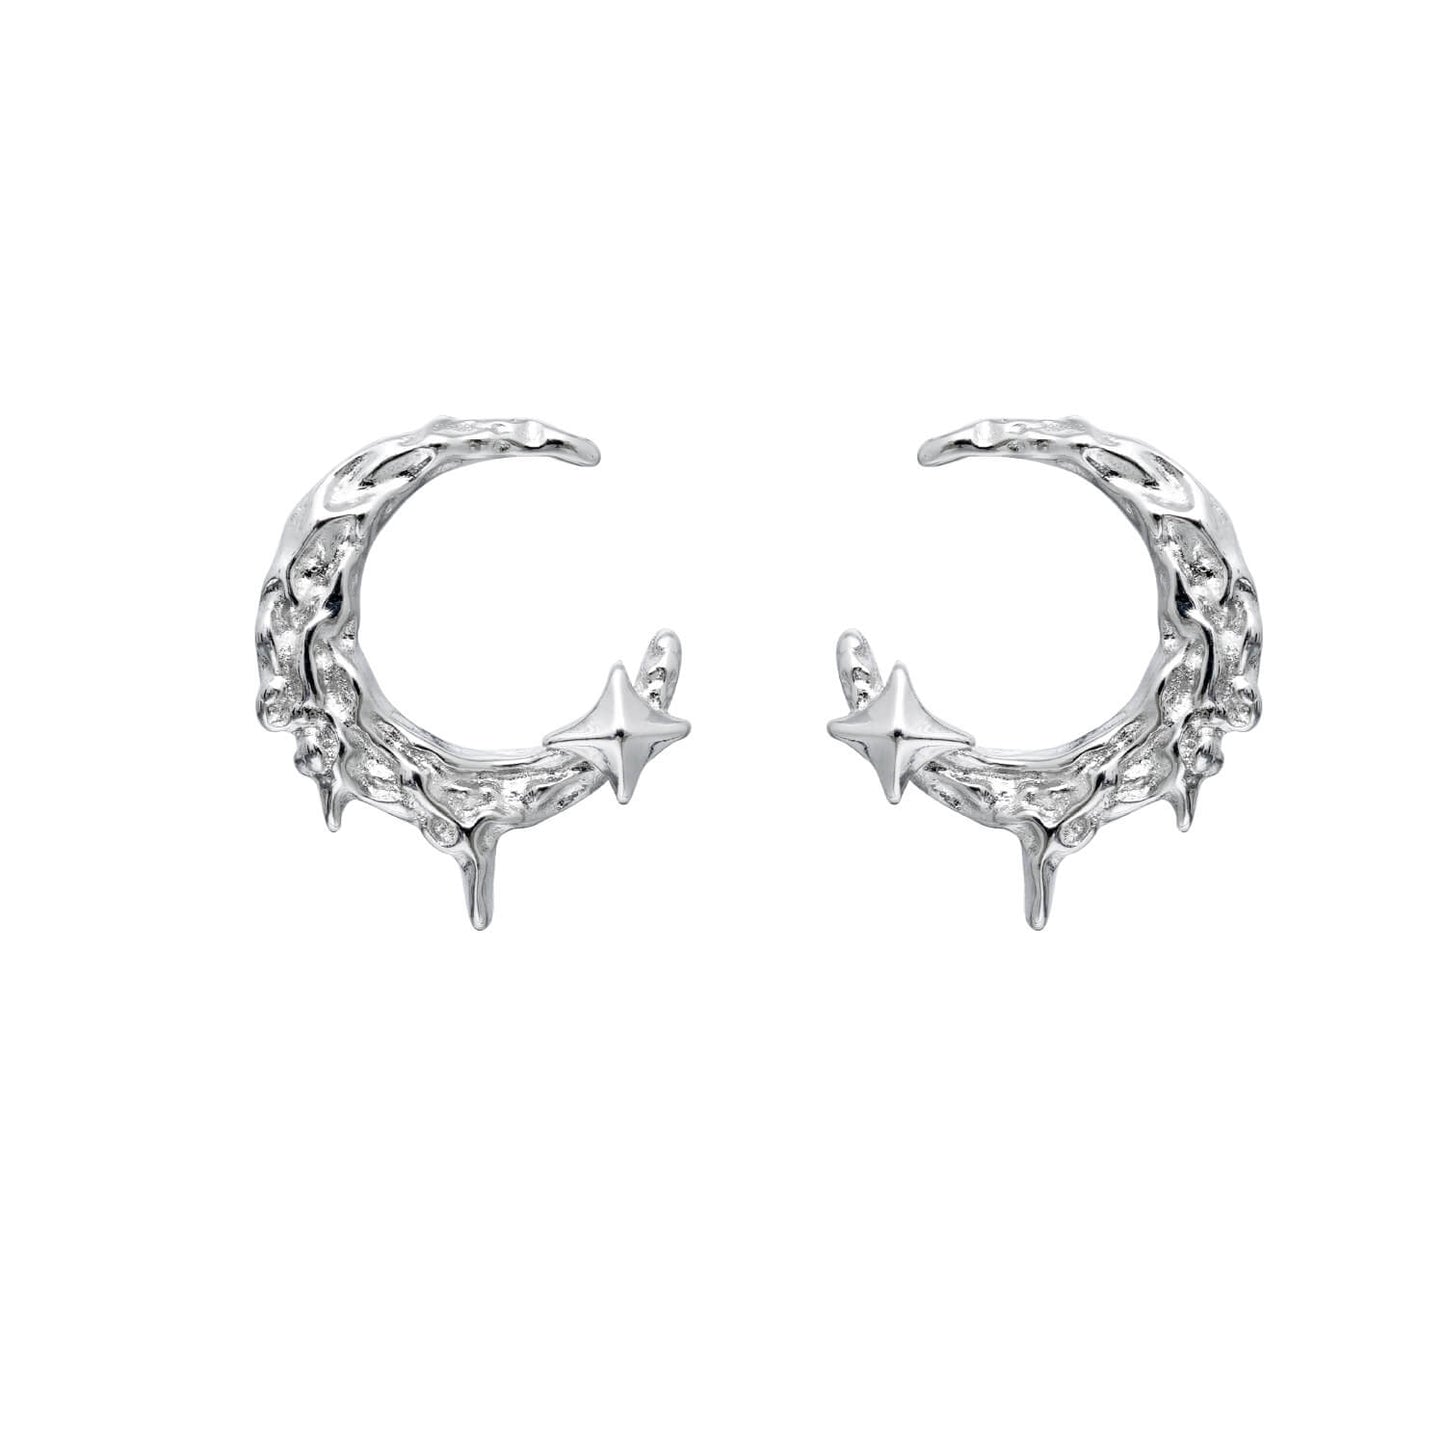 Crescent Moon Earrings Unique Ear Studs  Buy at Khanie